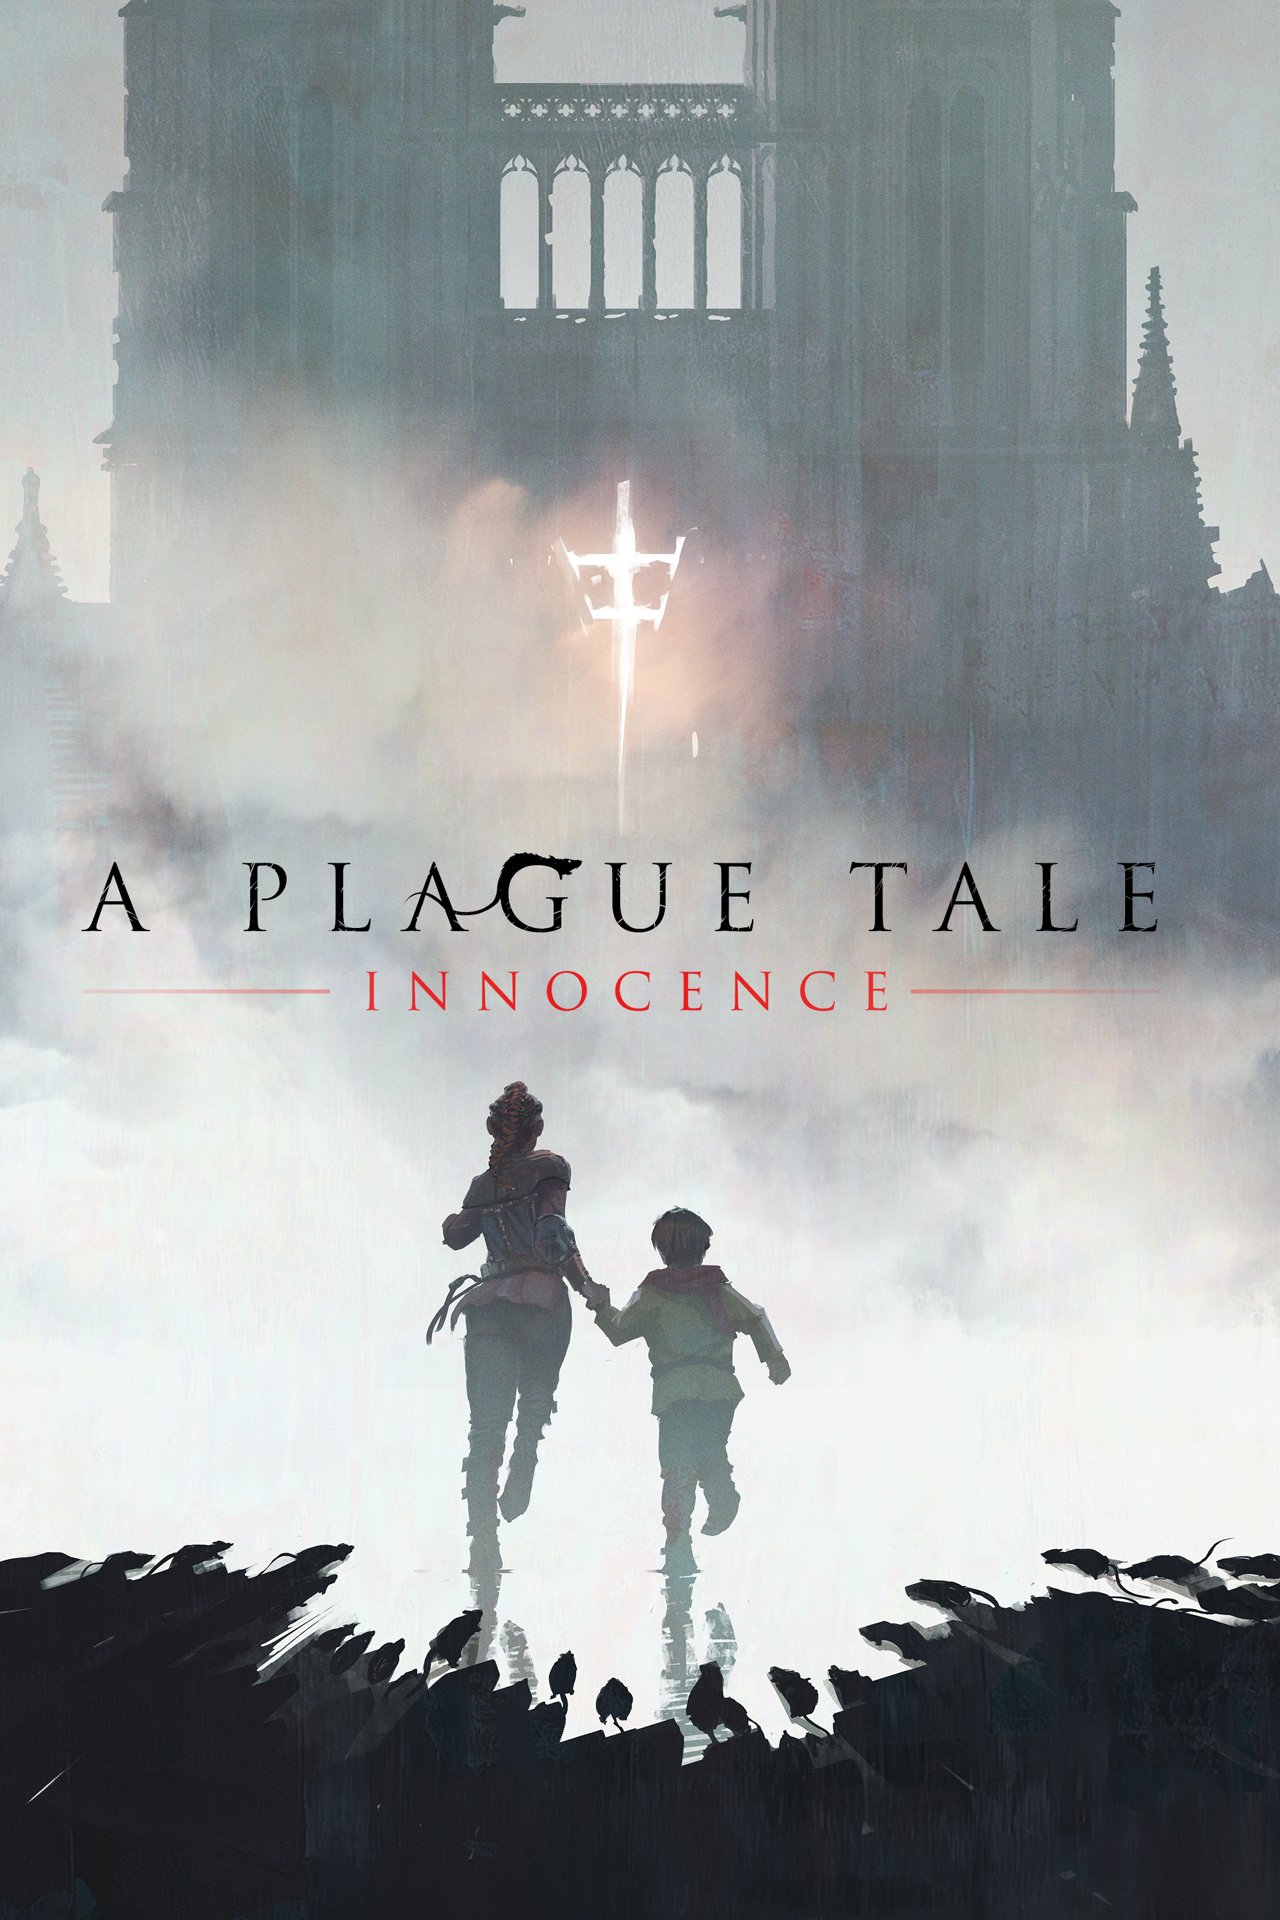 A Plague Tale: Innocence no Steam